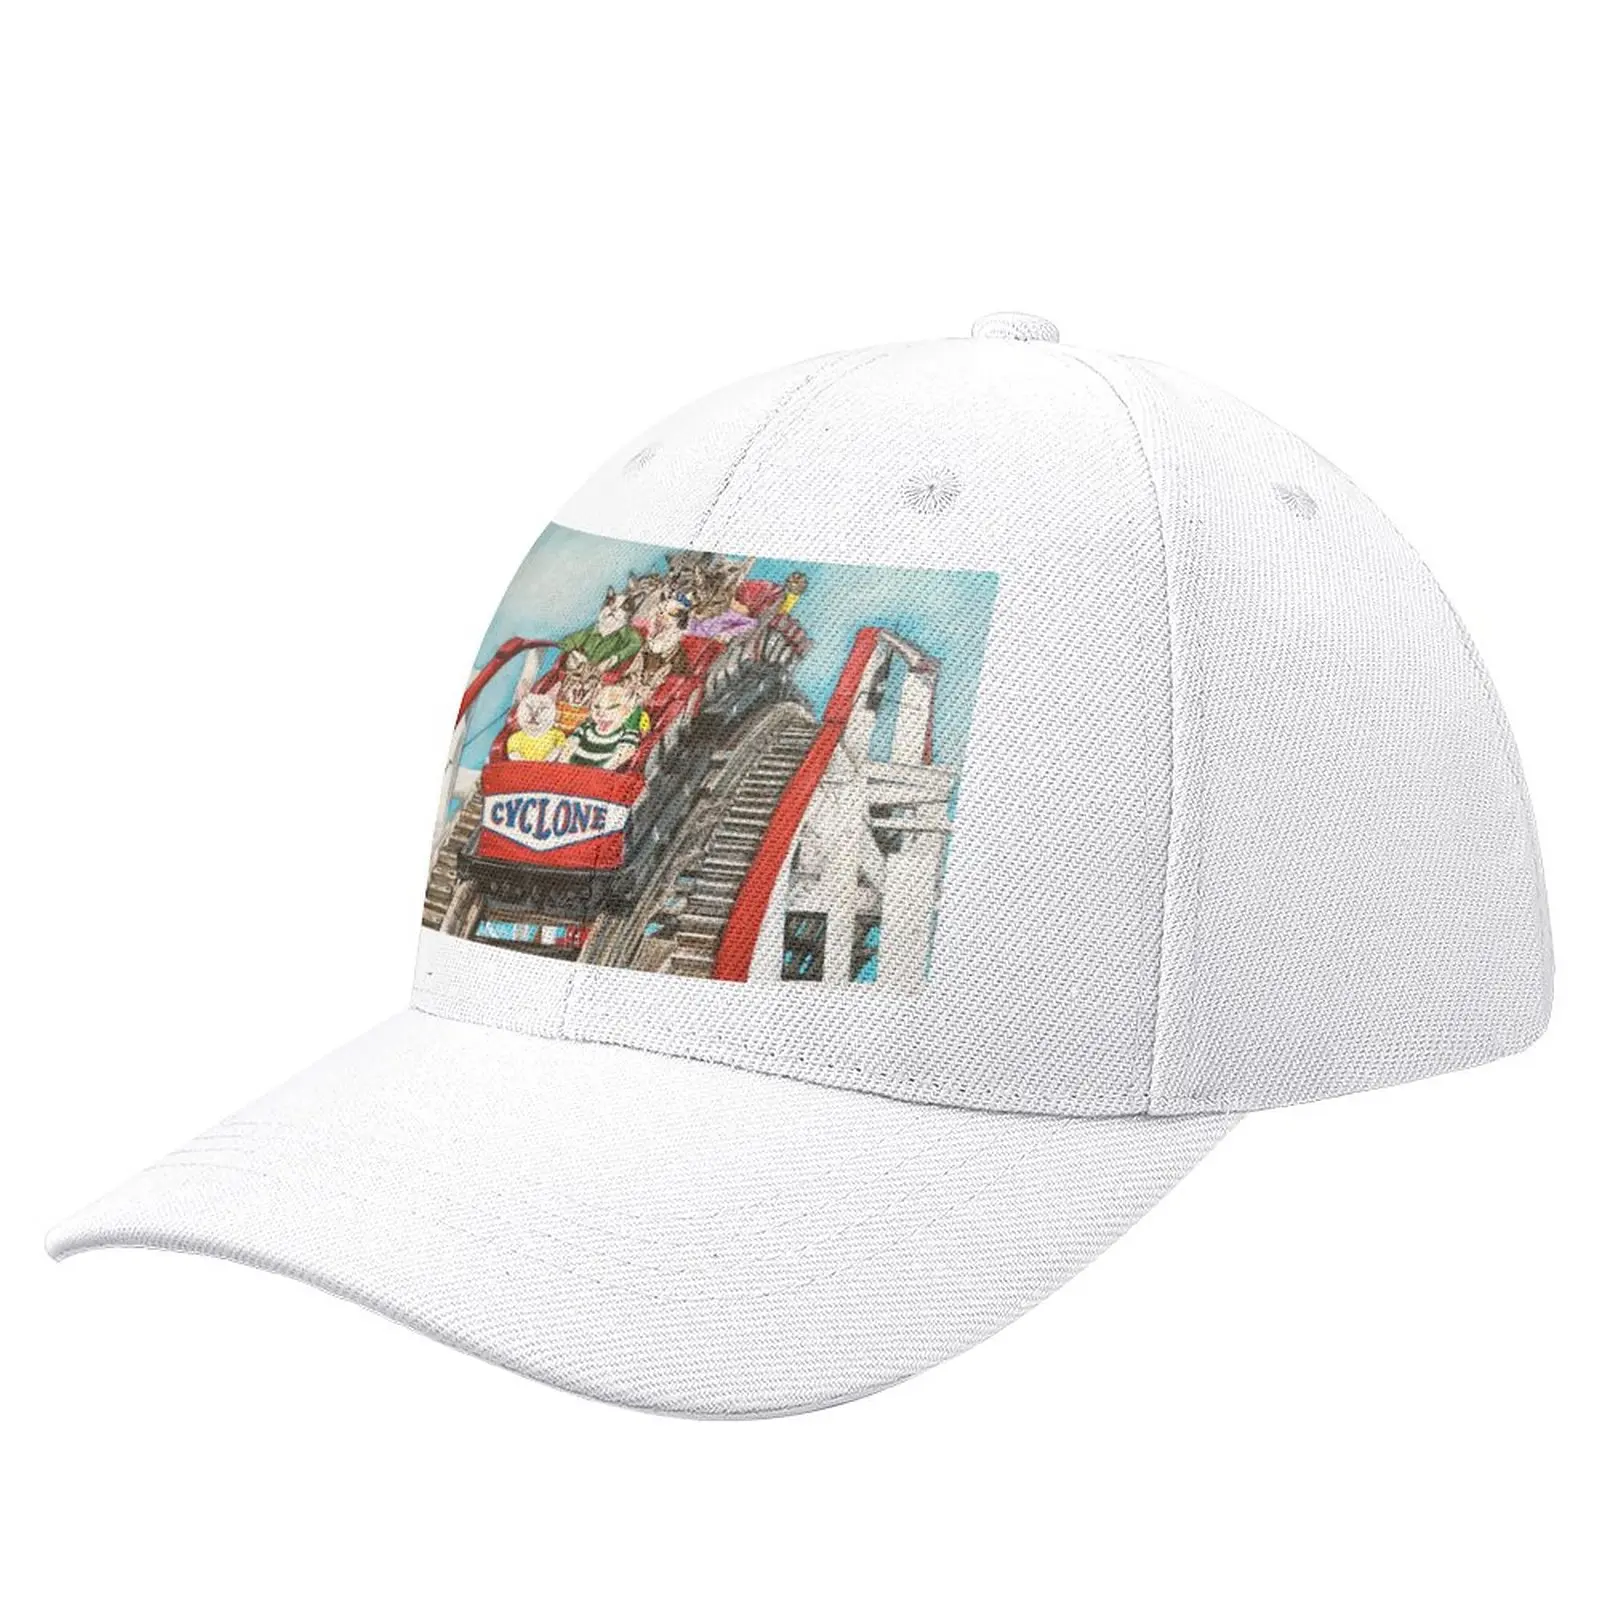 

Ride the Cyclone - Paint cats funny Baseball Cap Hats |-F-| Sun Cap Designer Hat Caps For Men Women'S